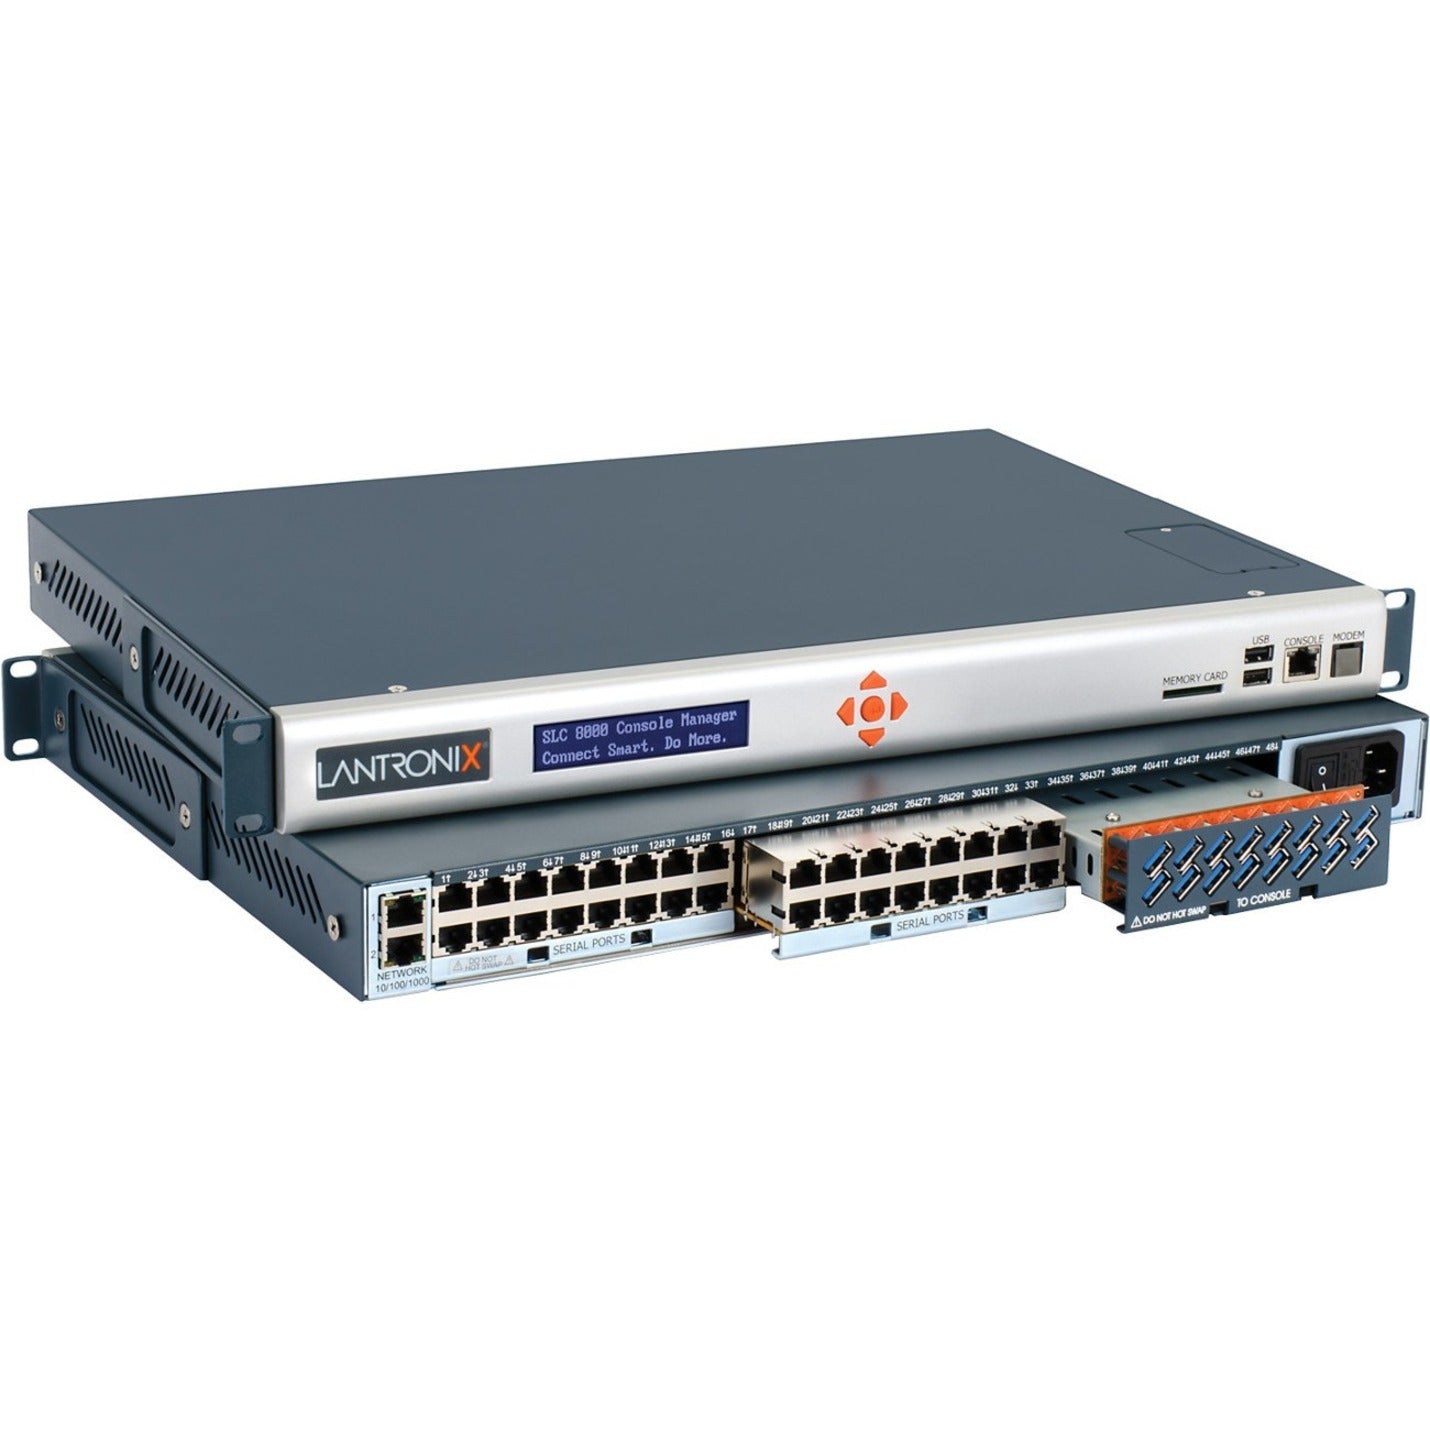 Lantronix SLC80482211S SLC 8000 Device Server, 48 Serial Ports, 2 Network Ports, Gigabit Ethernet